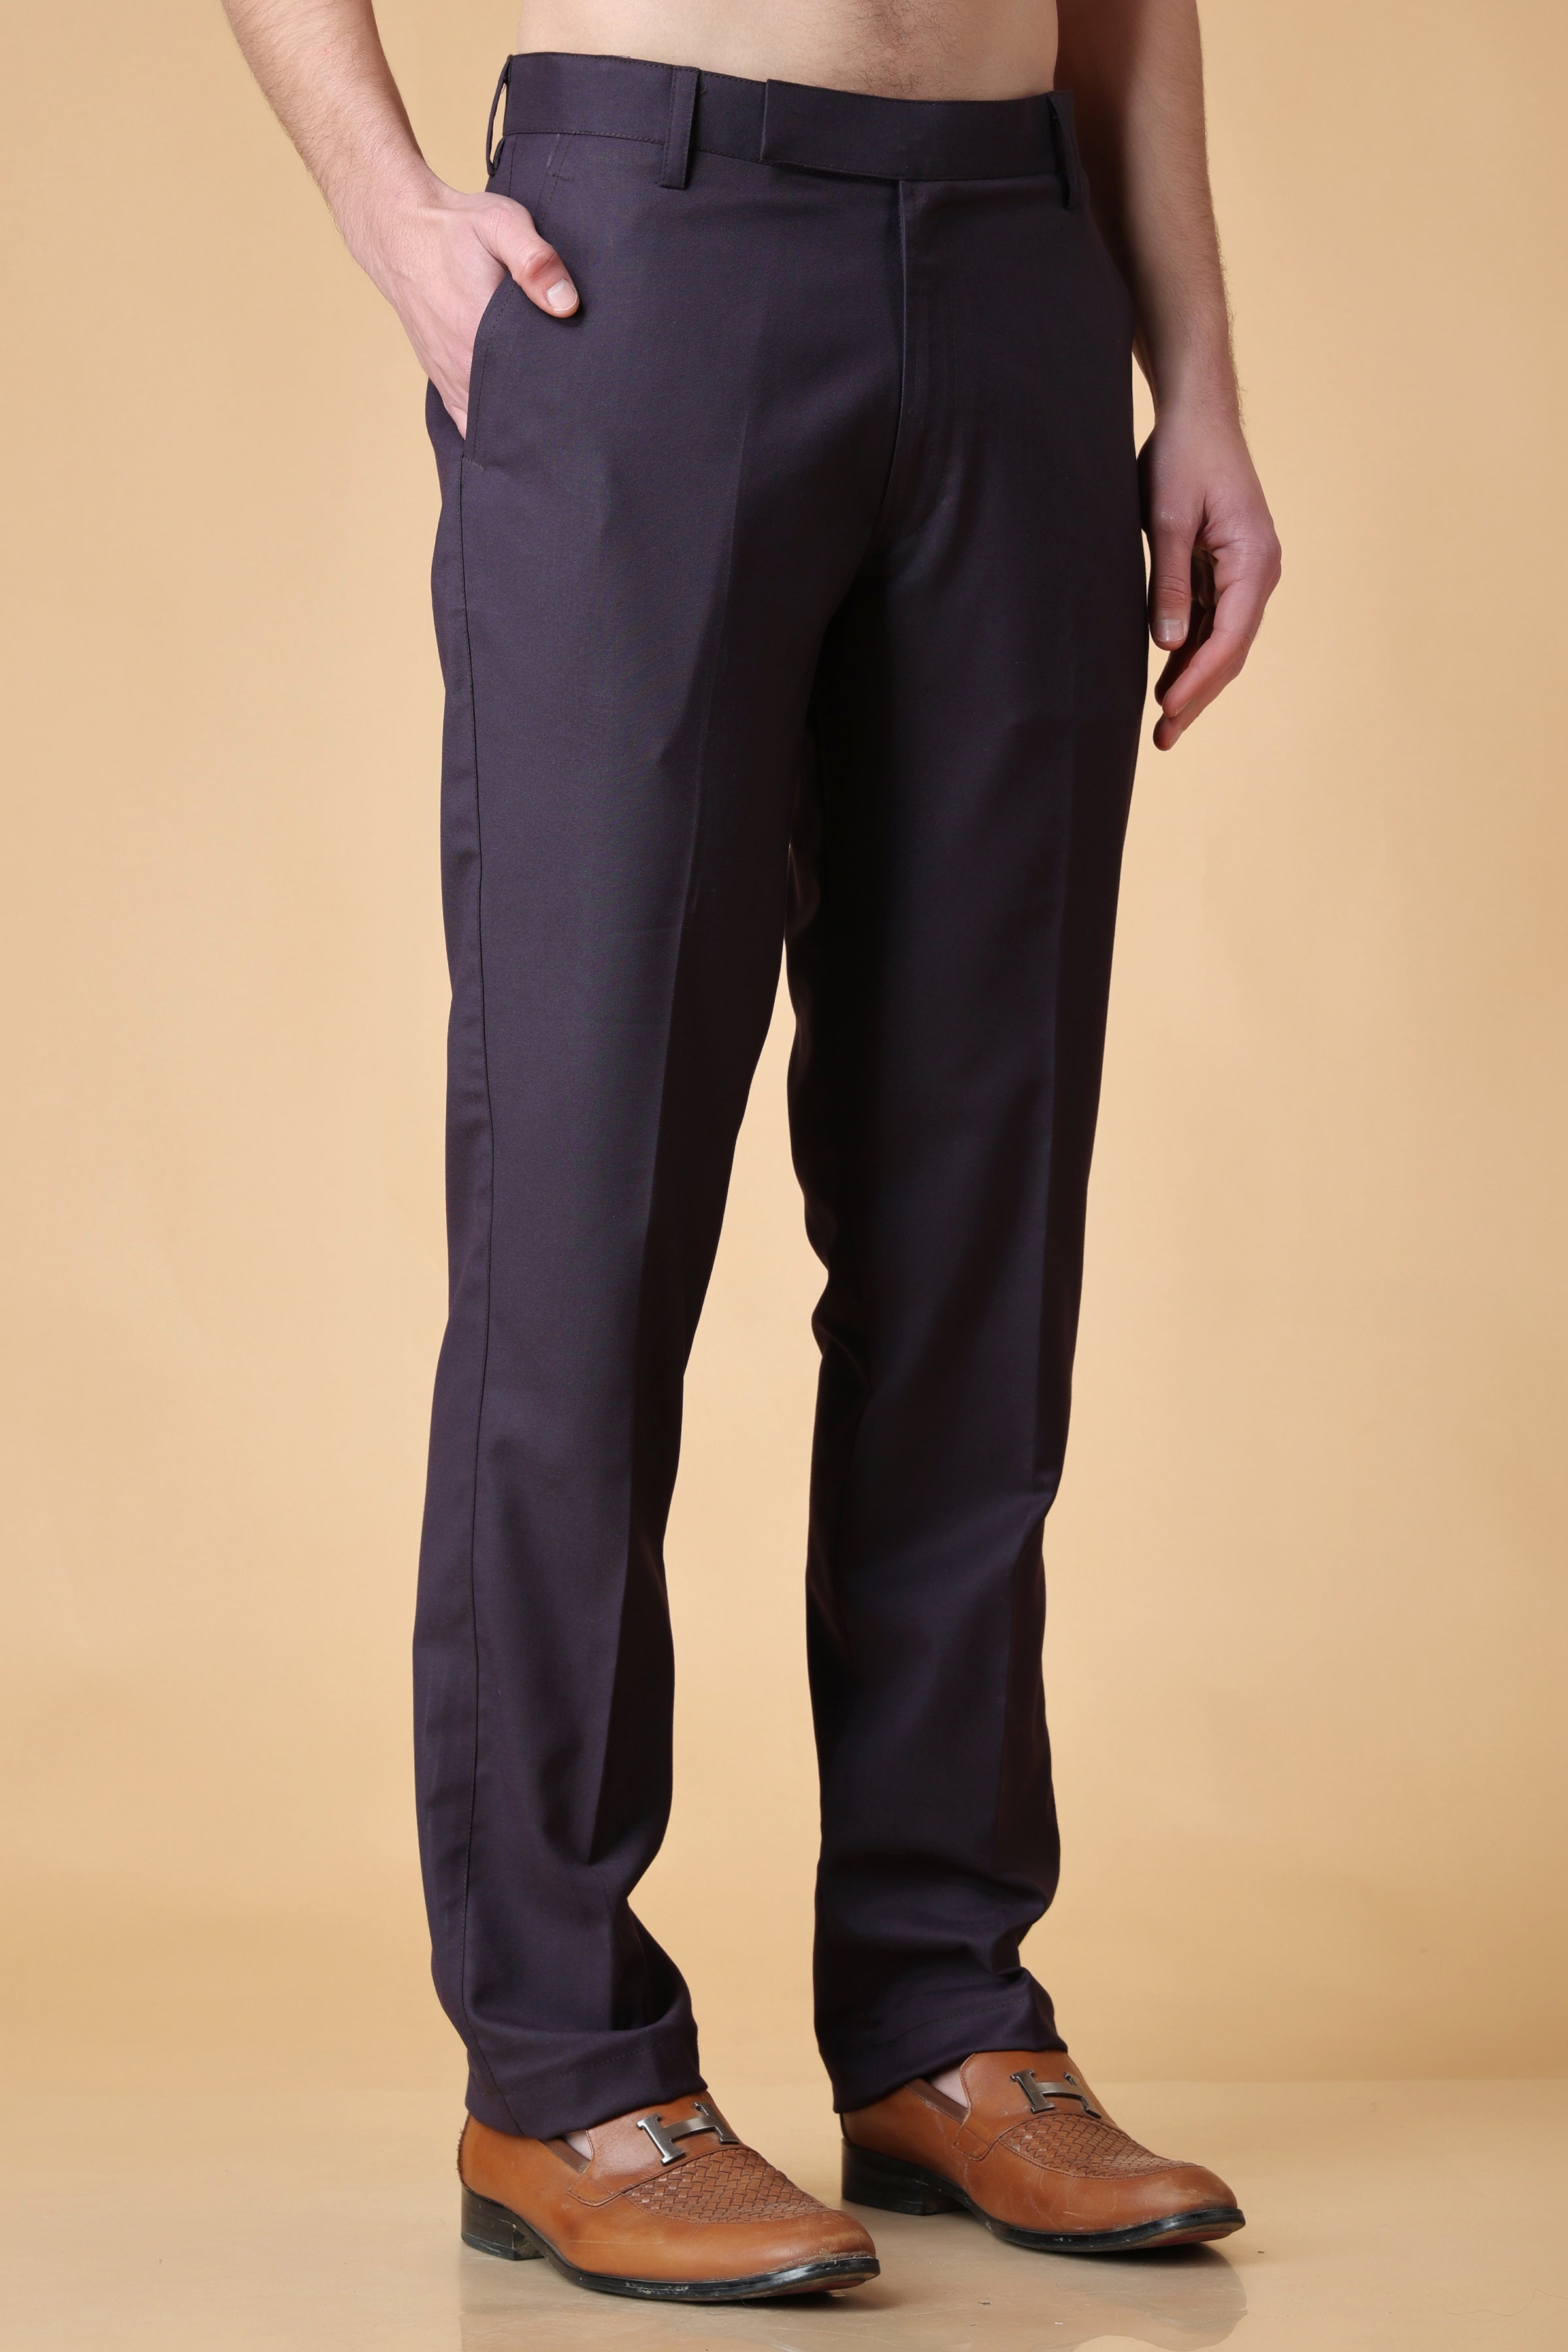 Findora formal Pants for Men  Mens Slim fit Formal Pant  Navy Blue  Trouser  Office wear Trousers